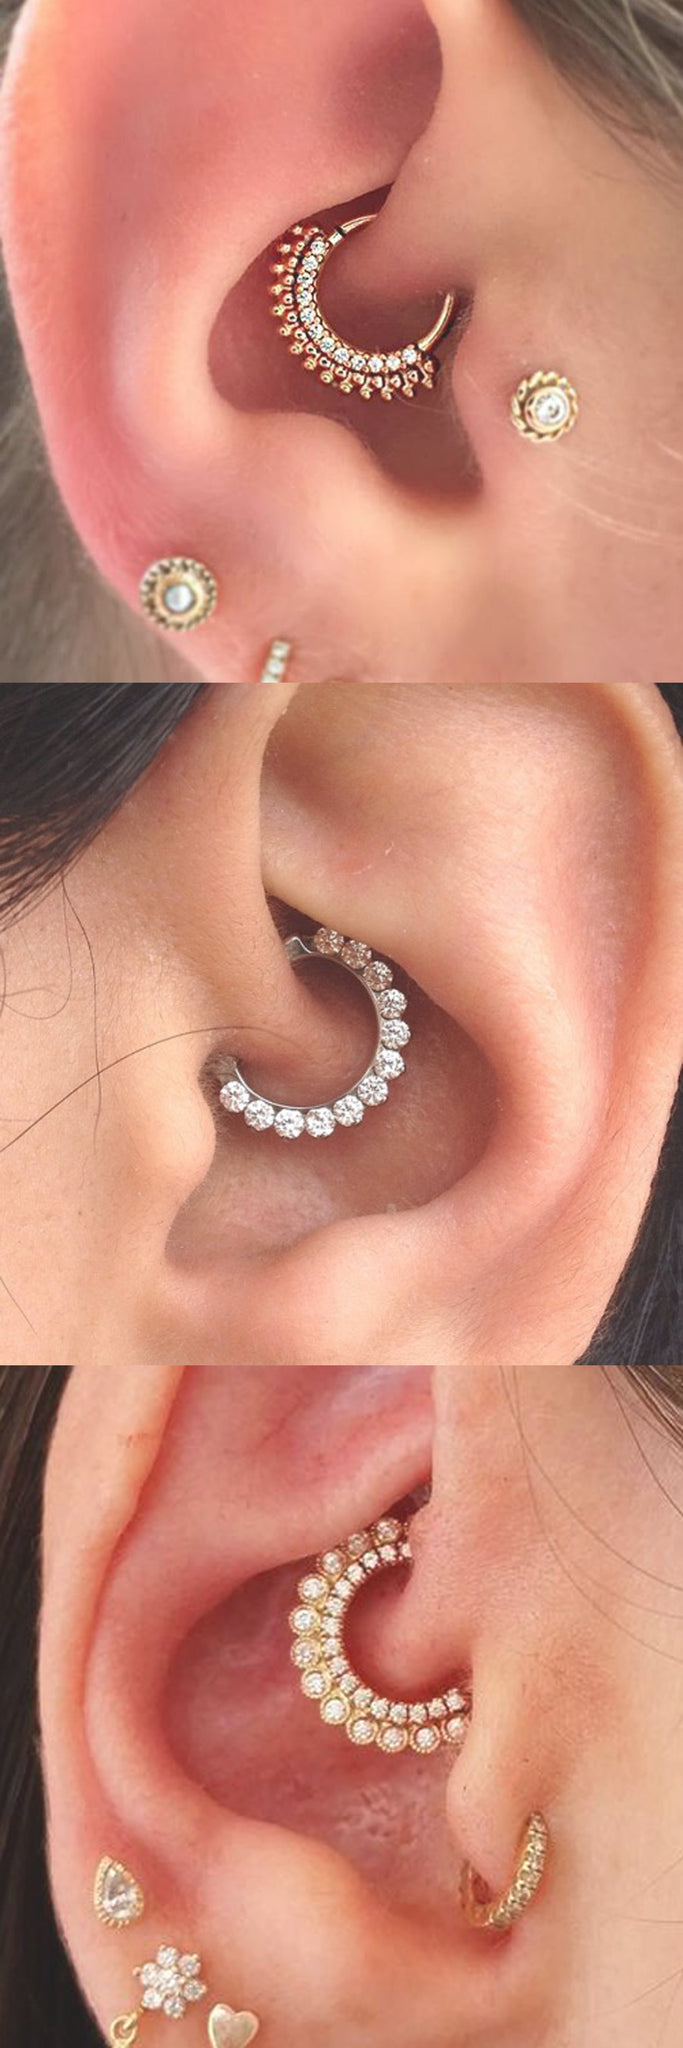 2017 Trendy Ear Piercing Ideas at MyBodiArt.com - Daith Piercing Jewelry Earring Gold Silver 16G - Tragus Stud 